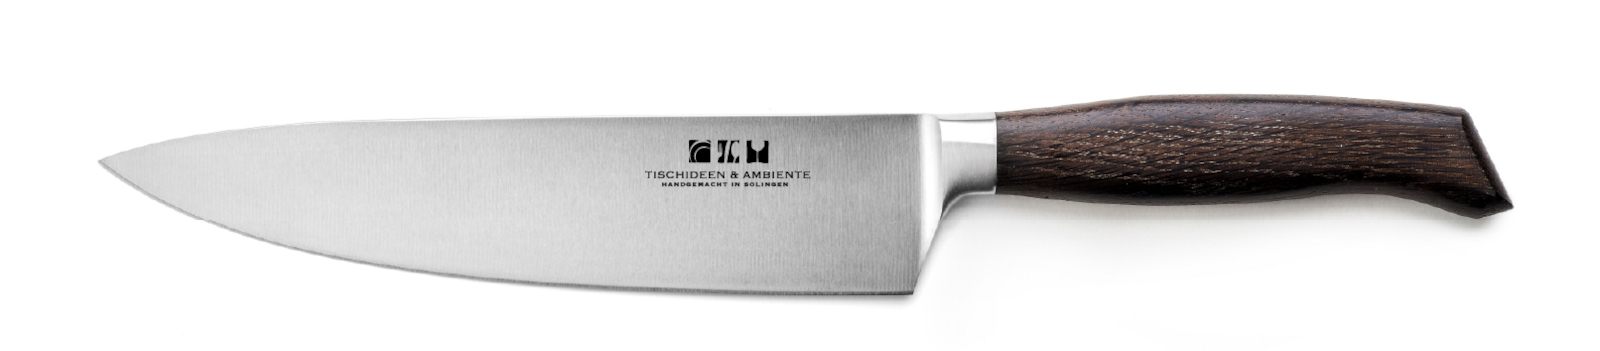 Tischideen & Ambiente Ergo Line Smoked Oak Kochmesser 21 cm